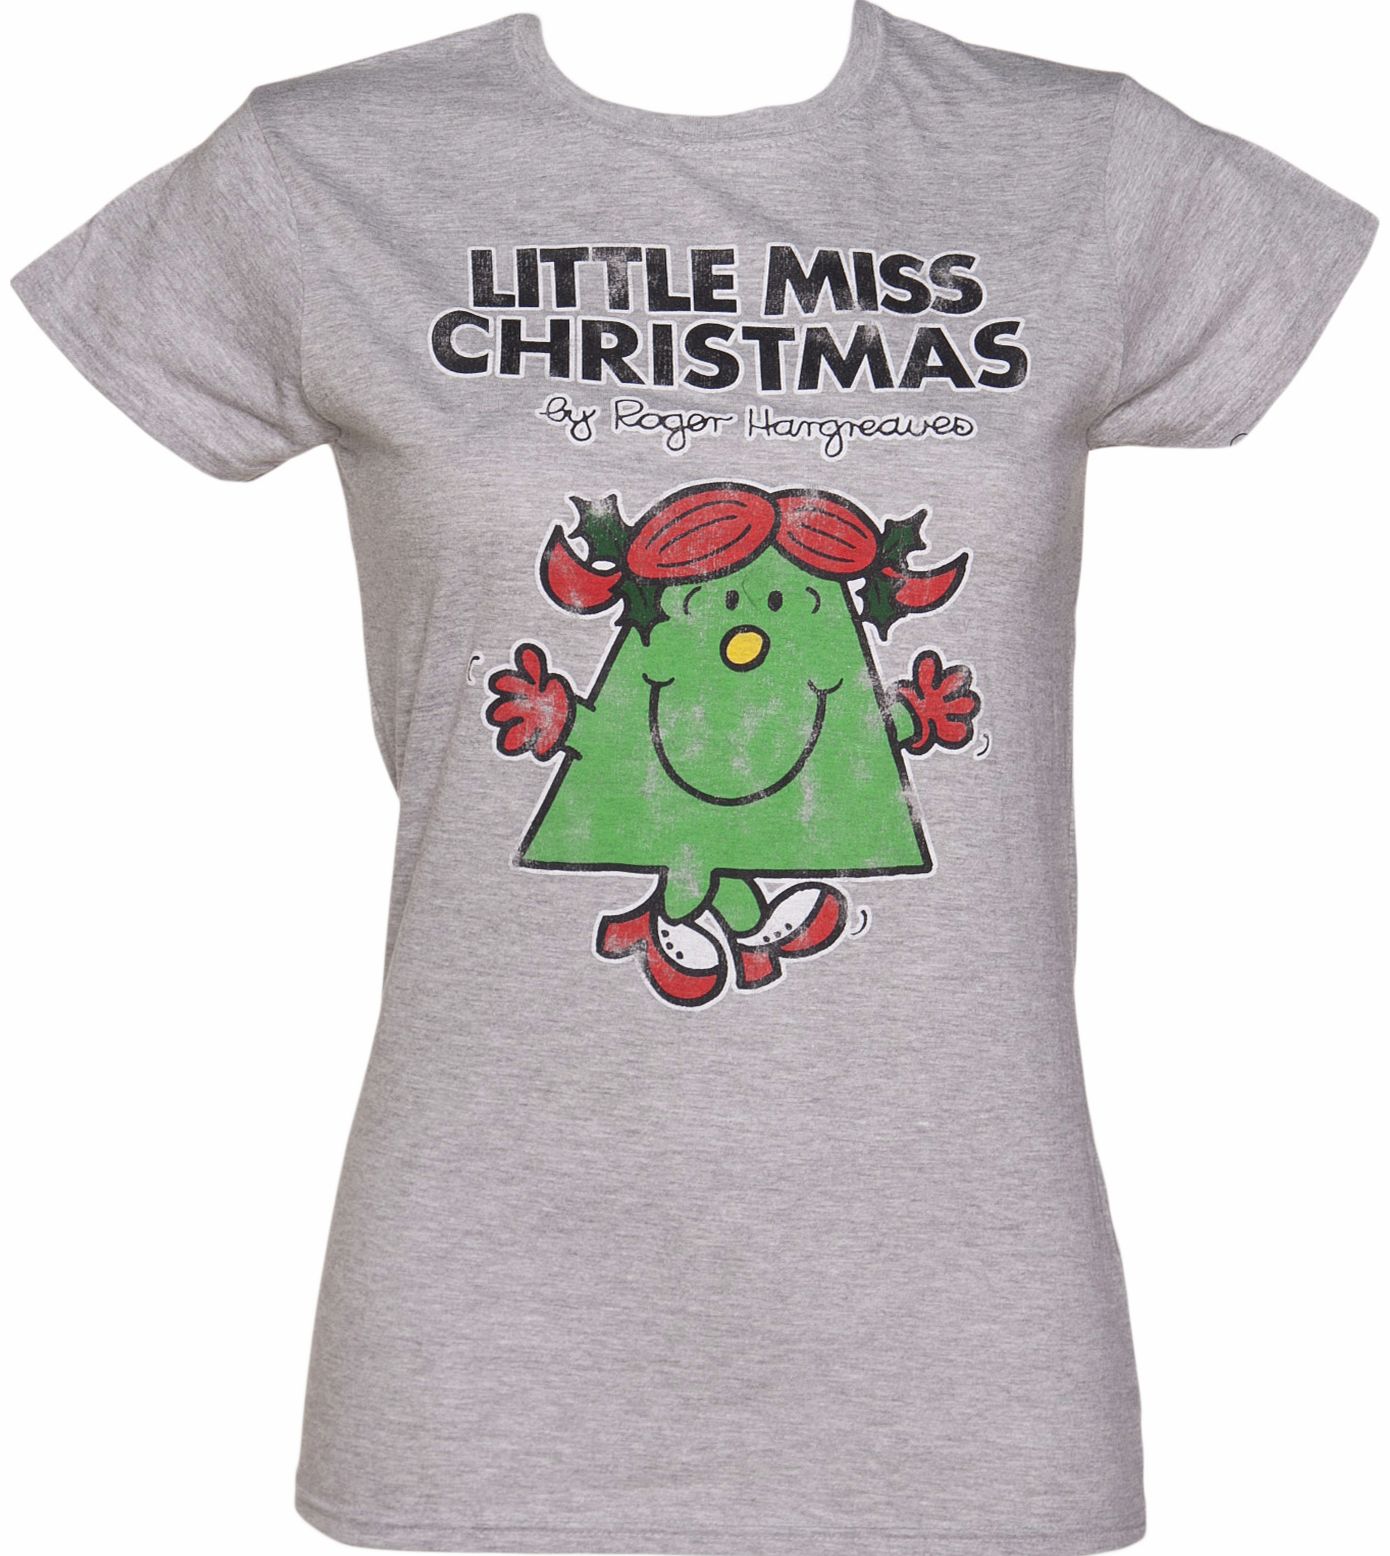 Ladies Little Miss Christmas T-Shirt